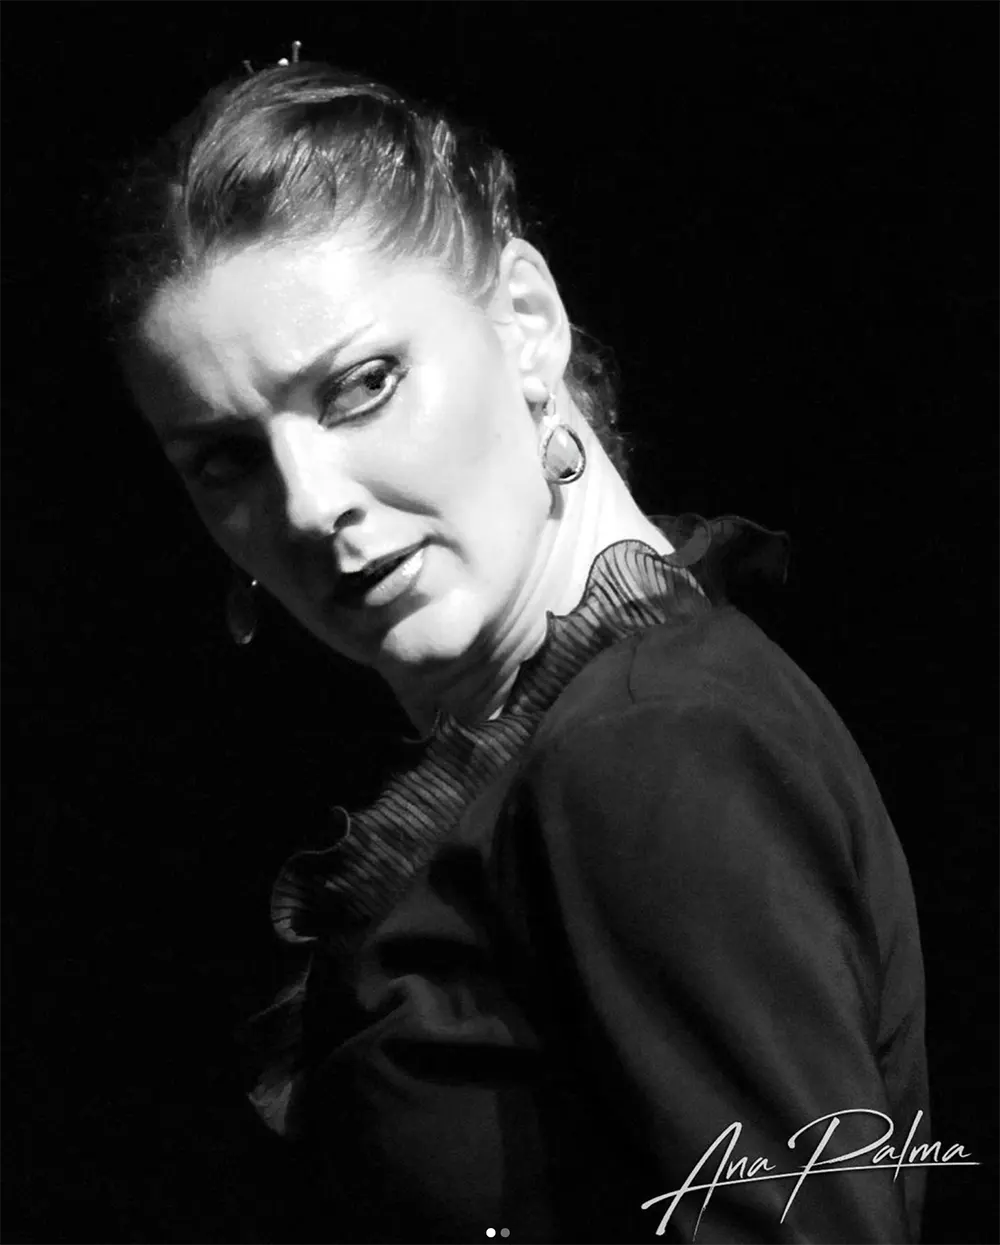 El mundo del flamenco y la danza llora la muerte de Rosana Romero